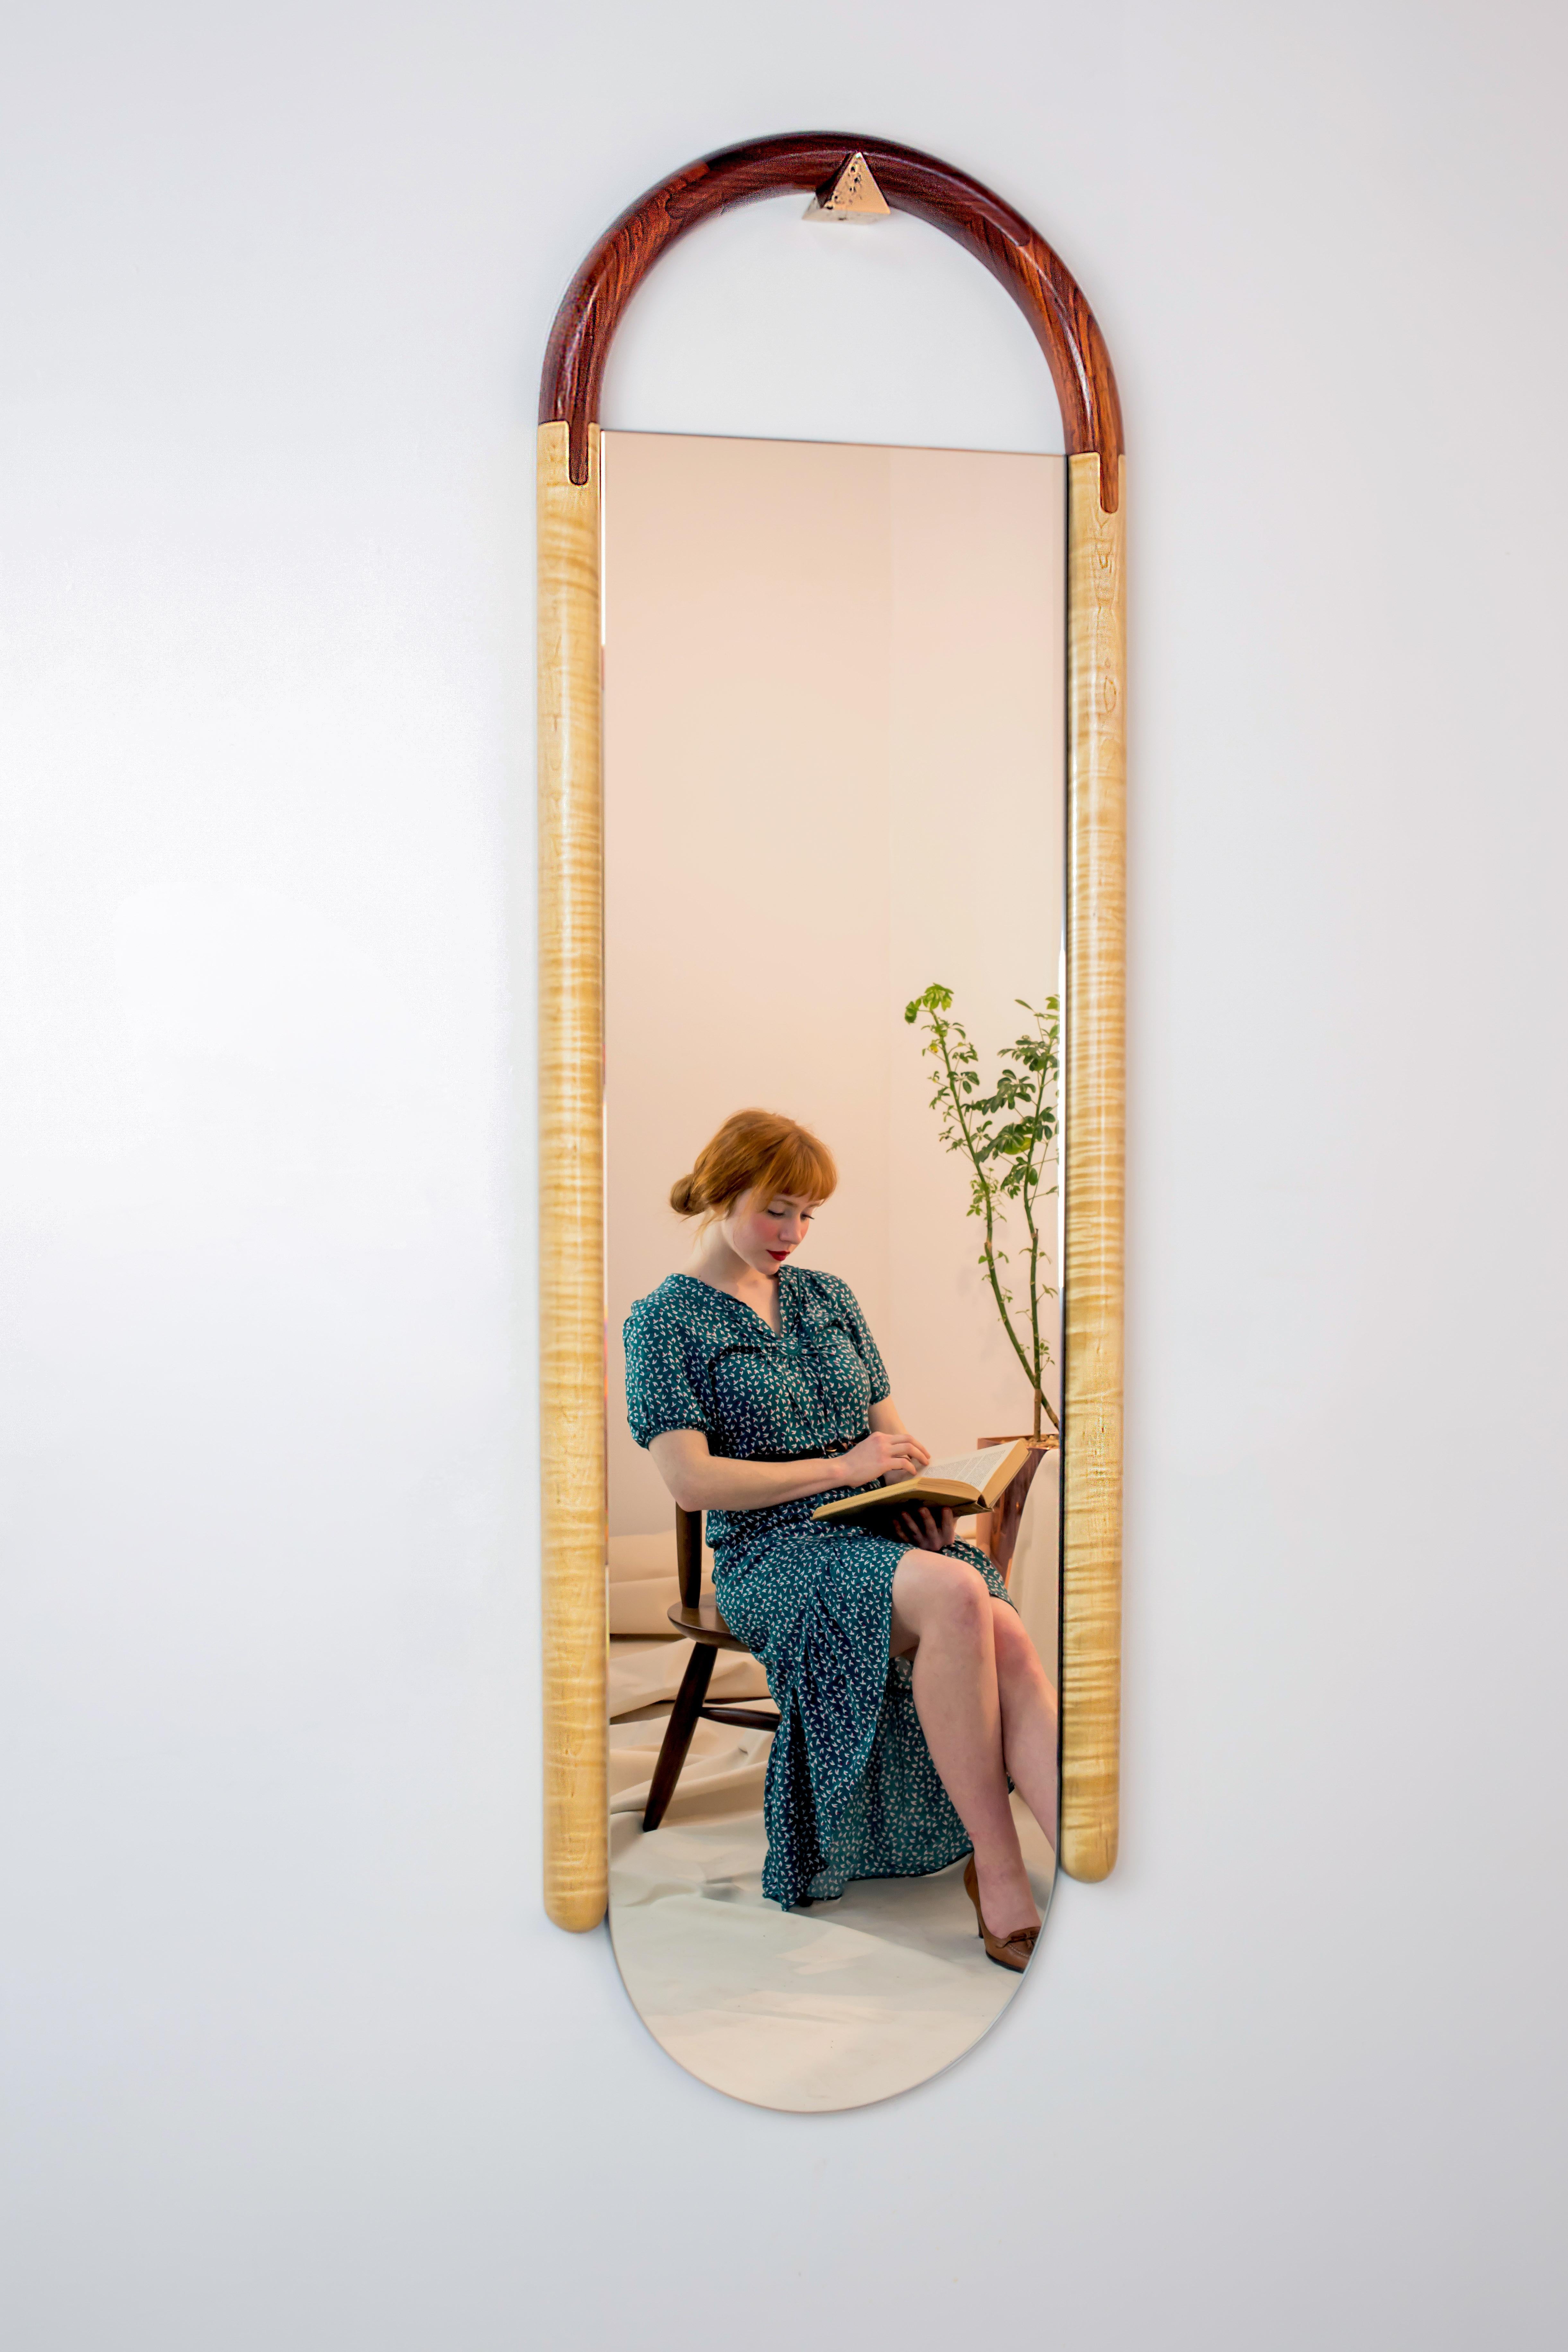 BIRNAM WOOD STUDIO - Tall Halo Mirror In New Condition For Sale In Bridgehampton, NY